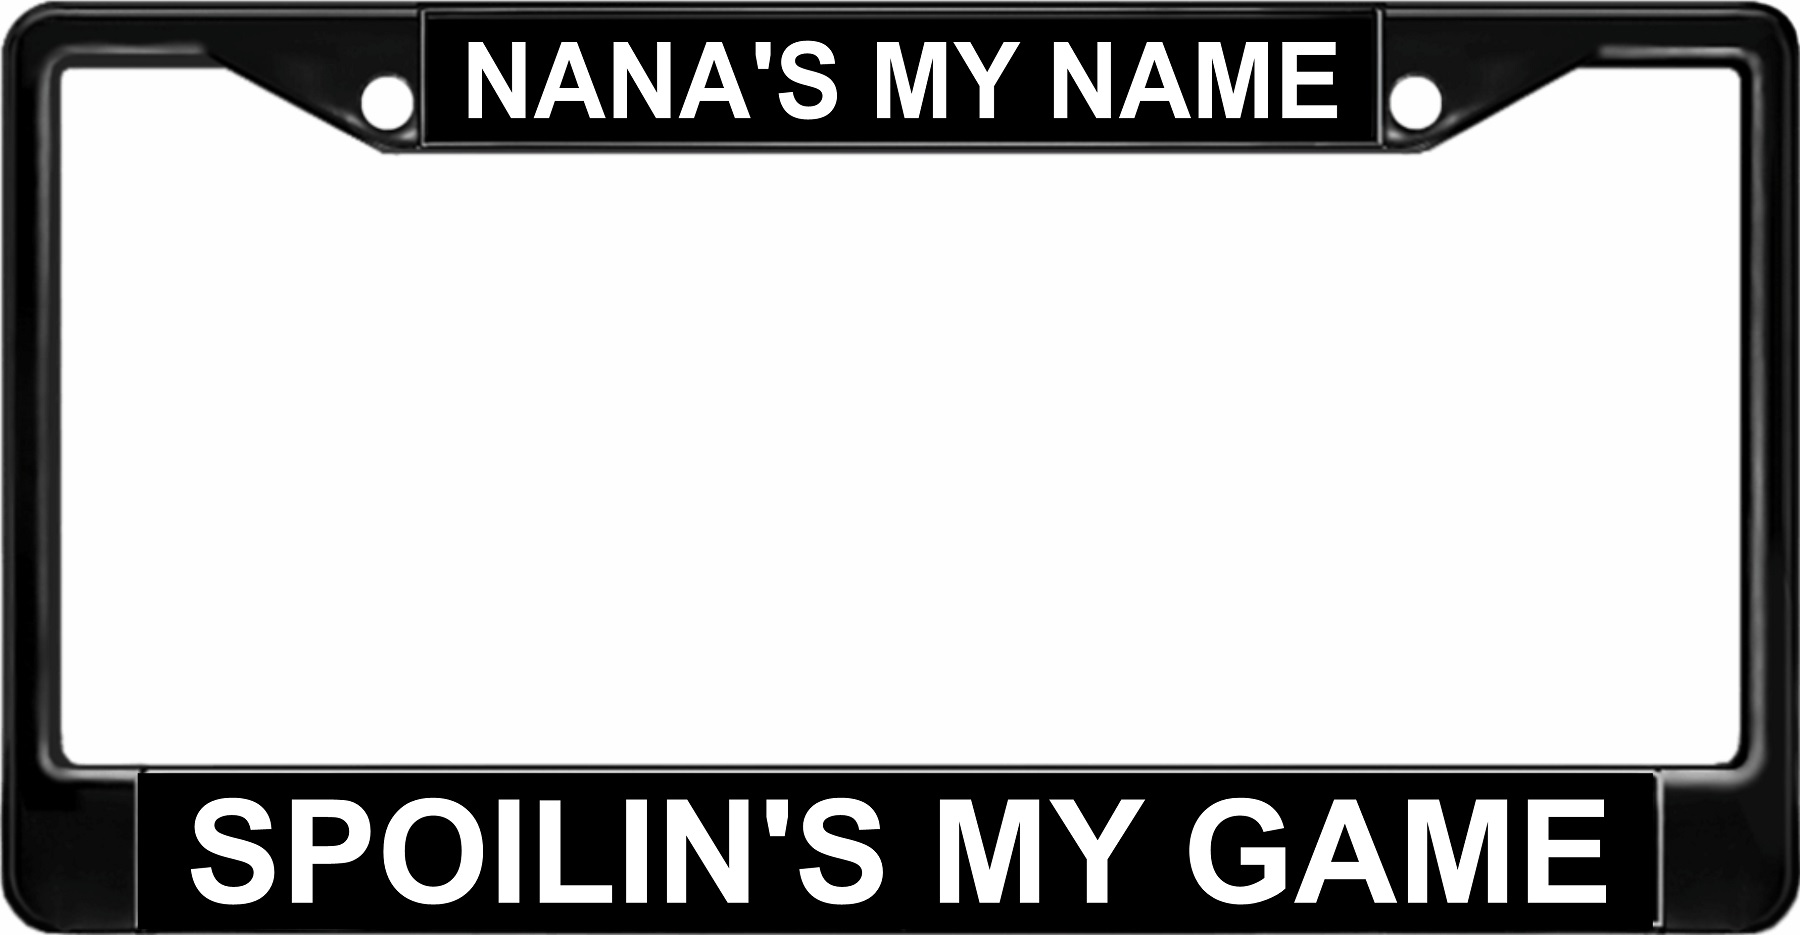 Nana's My Name Spoilin's My GAME Black License Plate Frame